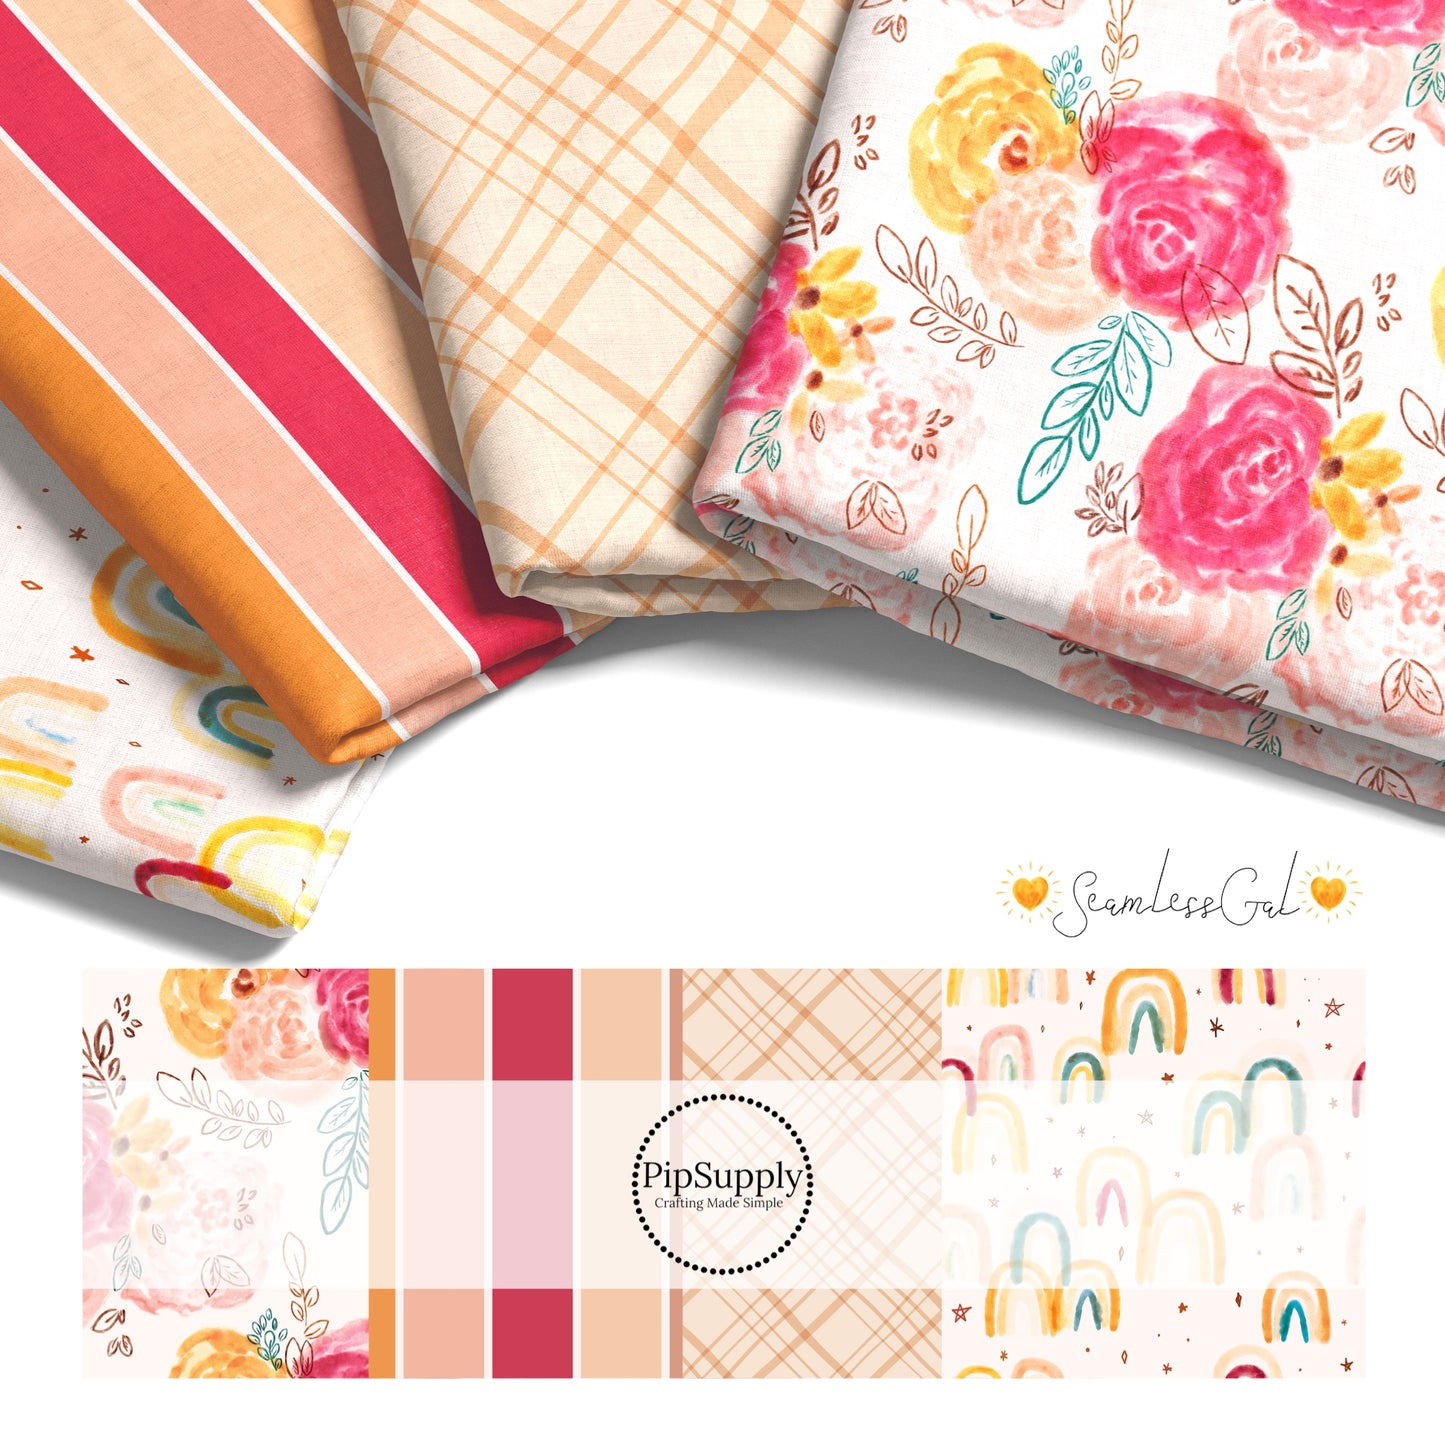 Boho Floral | Seamless Gal | Fabric